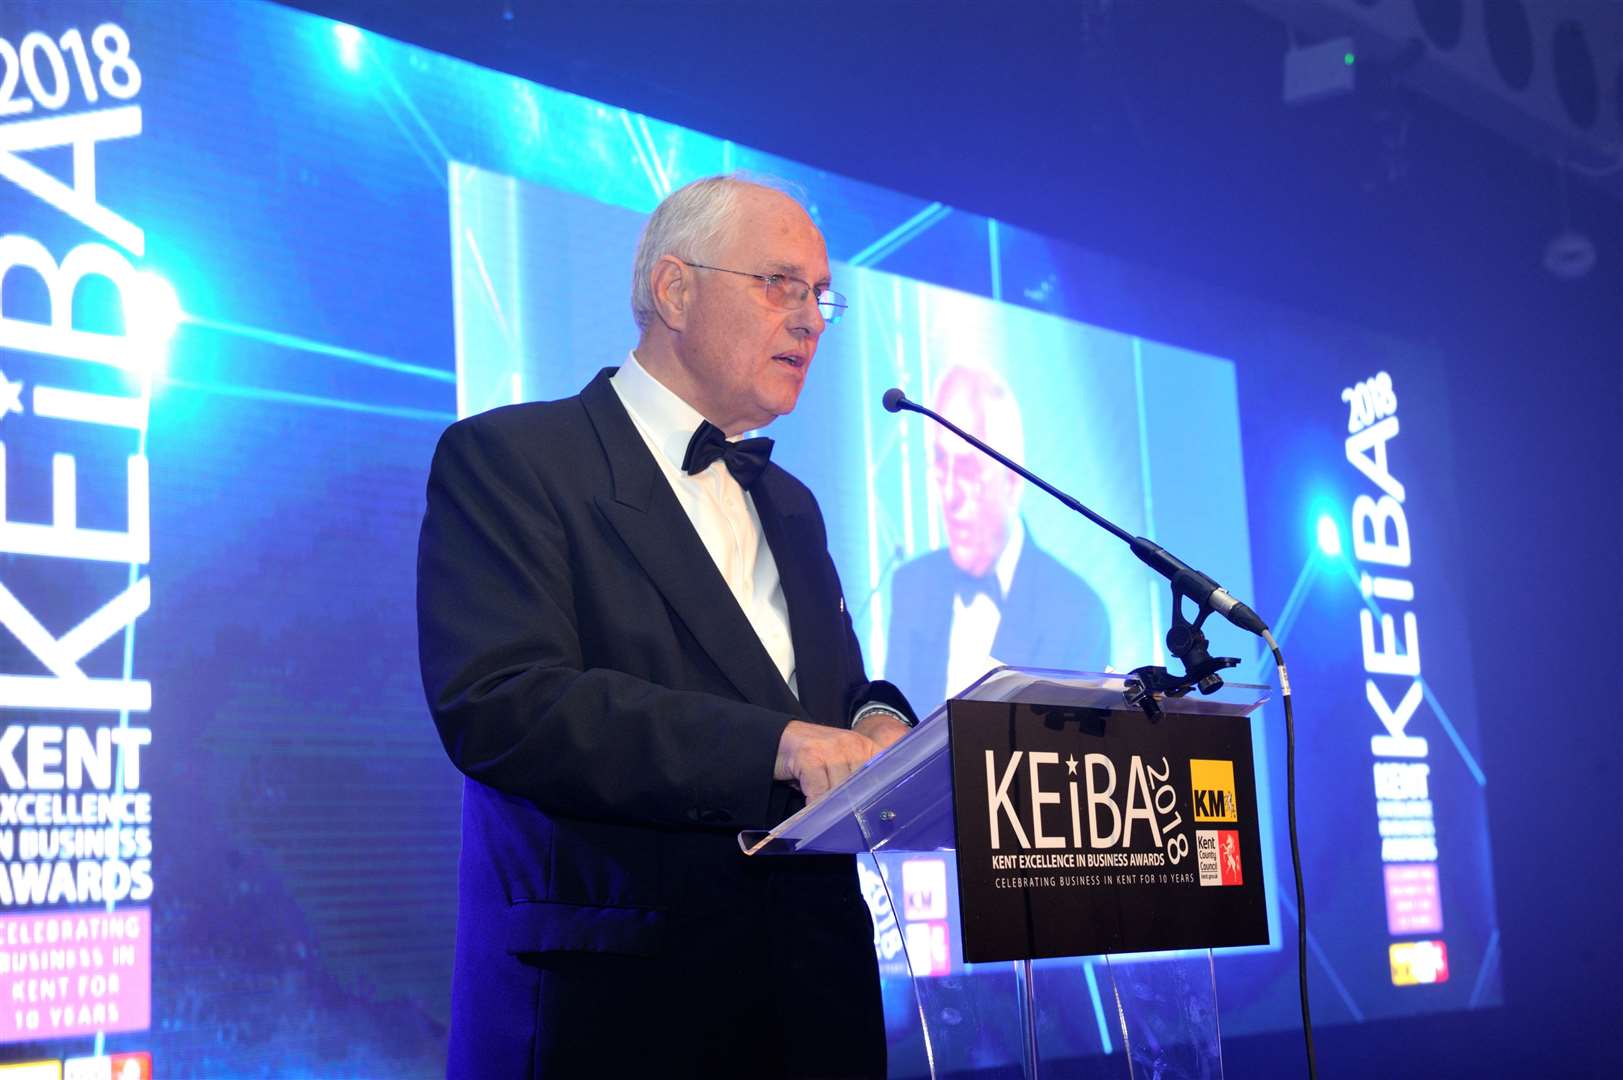 Chairman of the KEiBA judging panel Geoff Miles